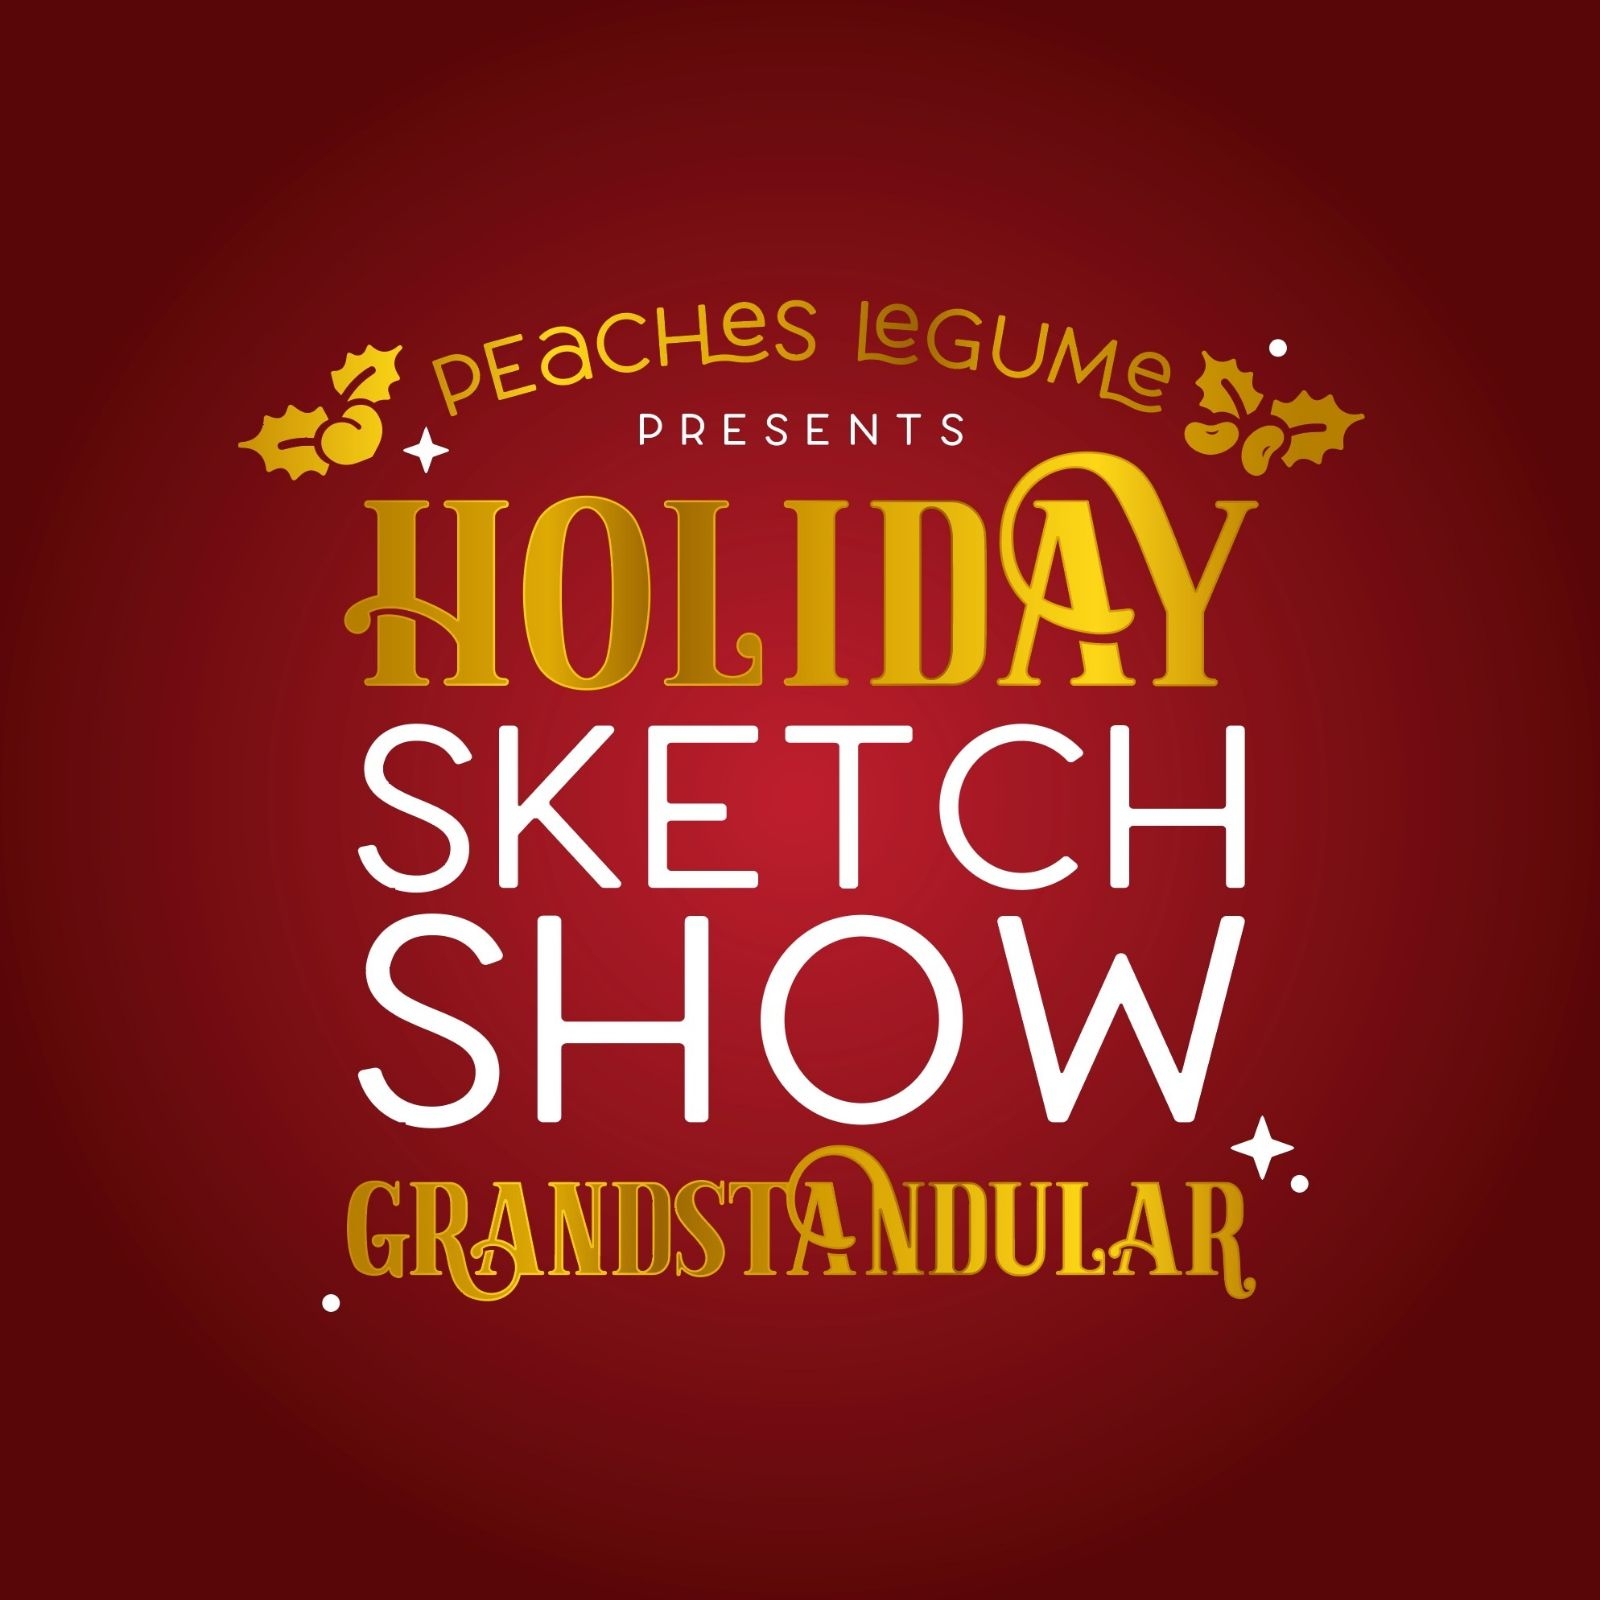 Peaches LeGume Presents: Holiday Sketch Show Grandstandular